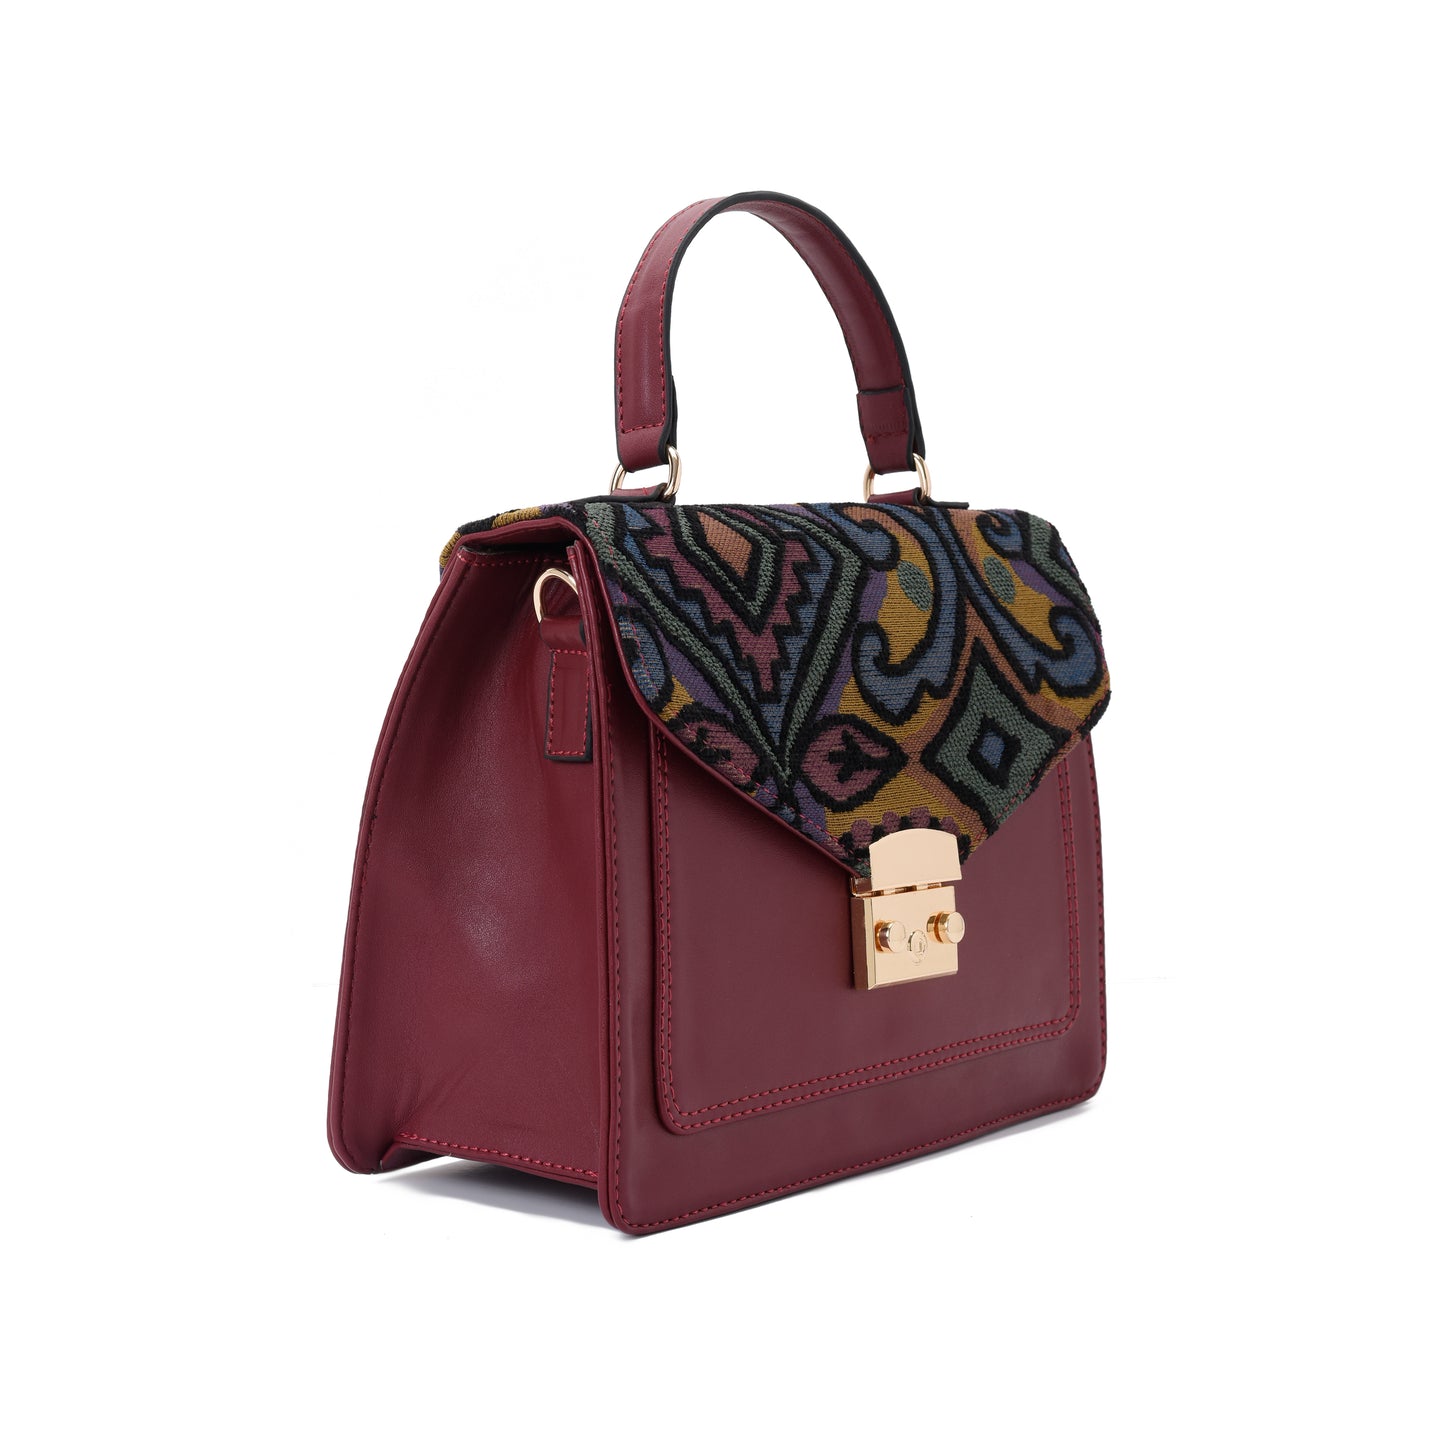 Burgandy Handbag with Colorful fabric- Code 905